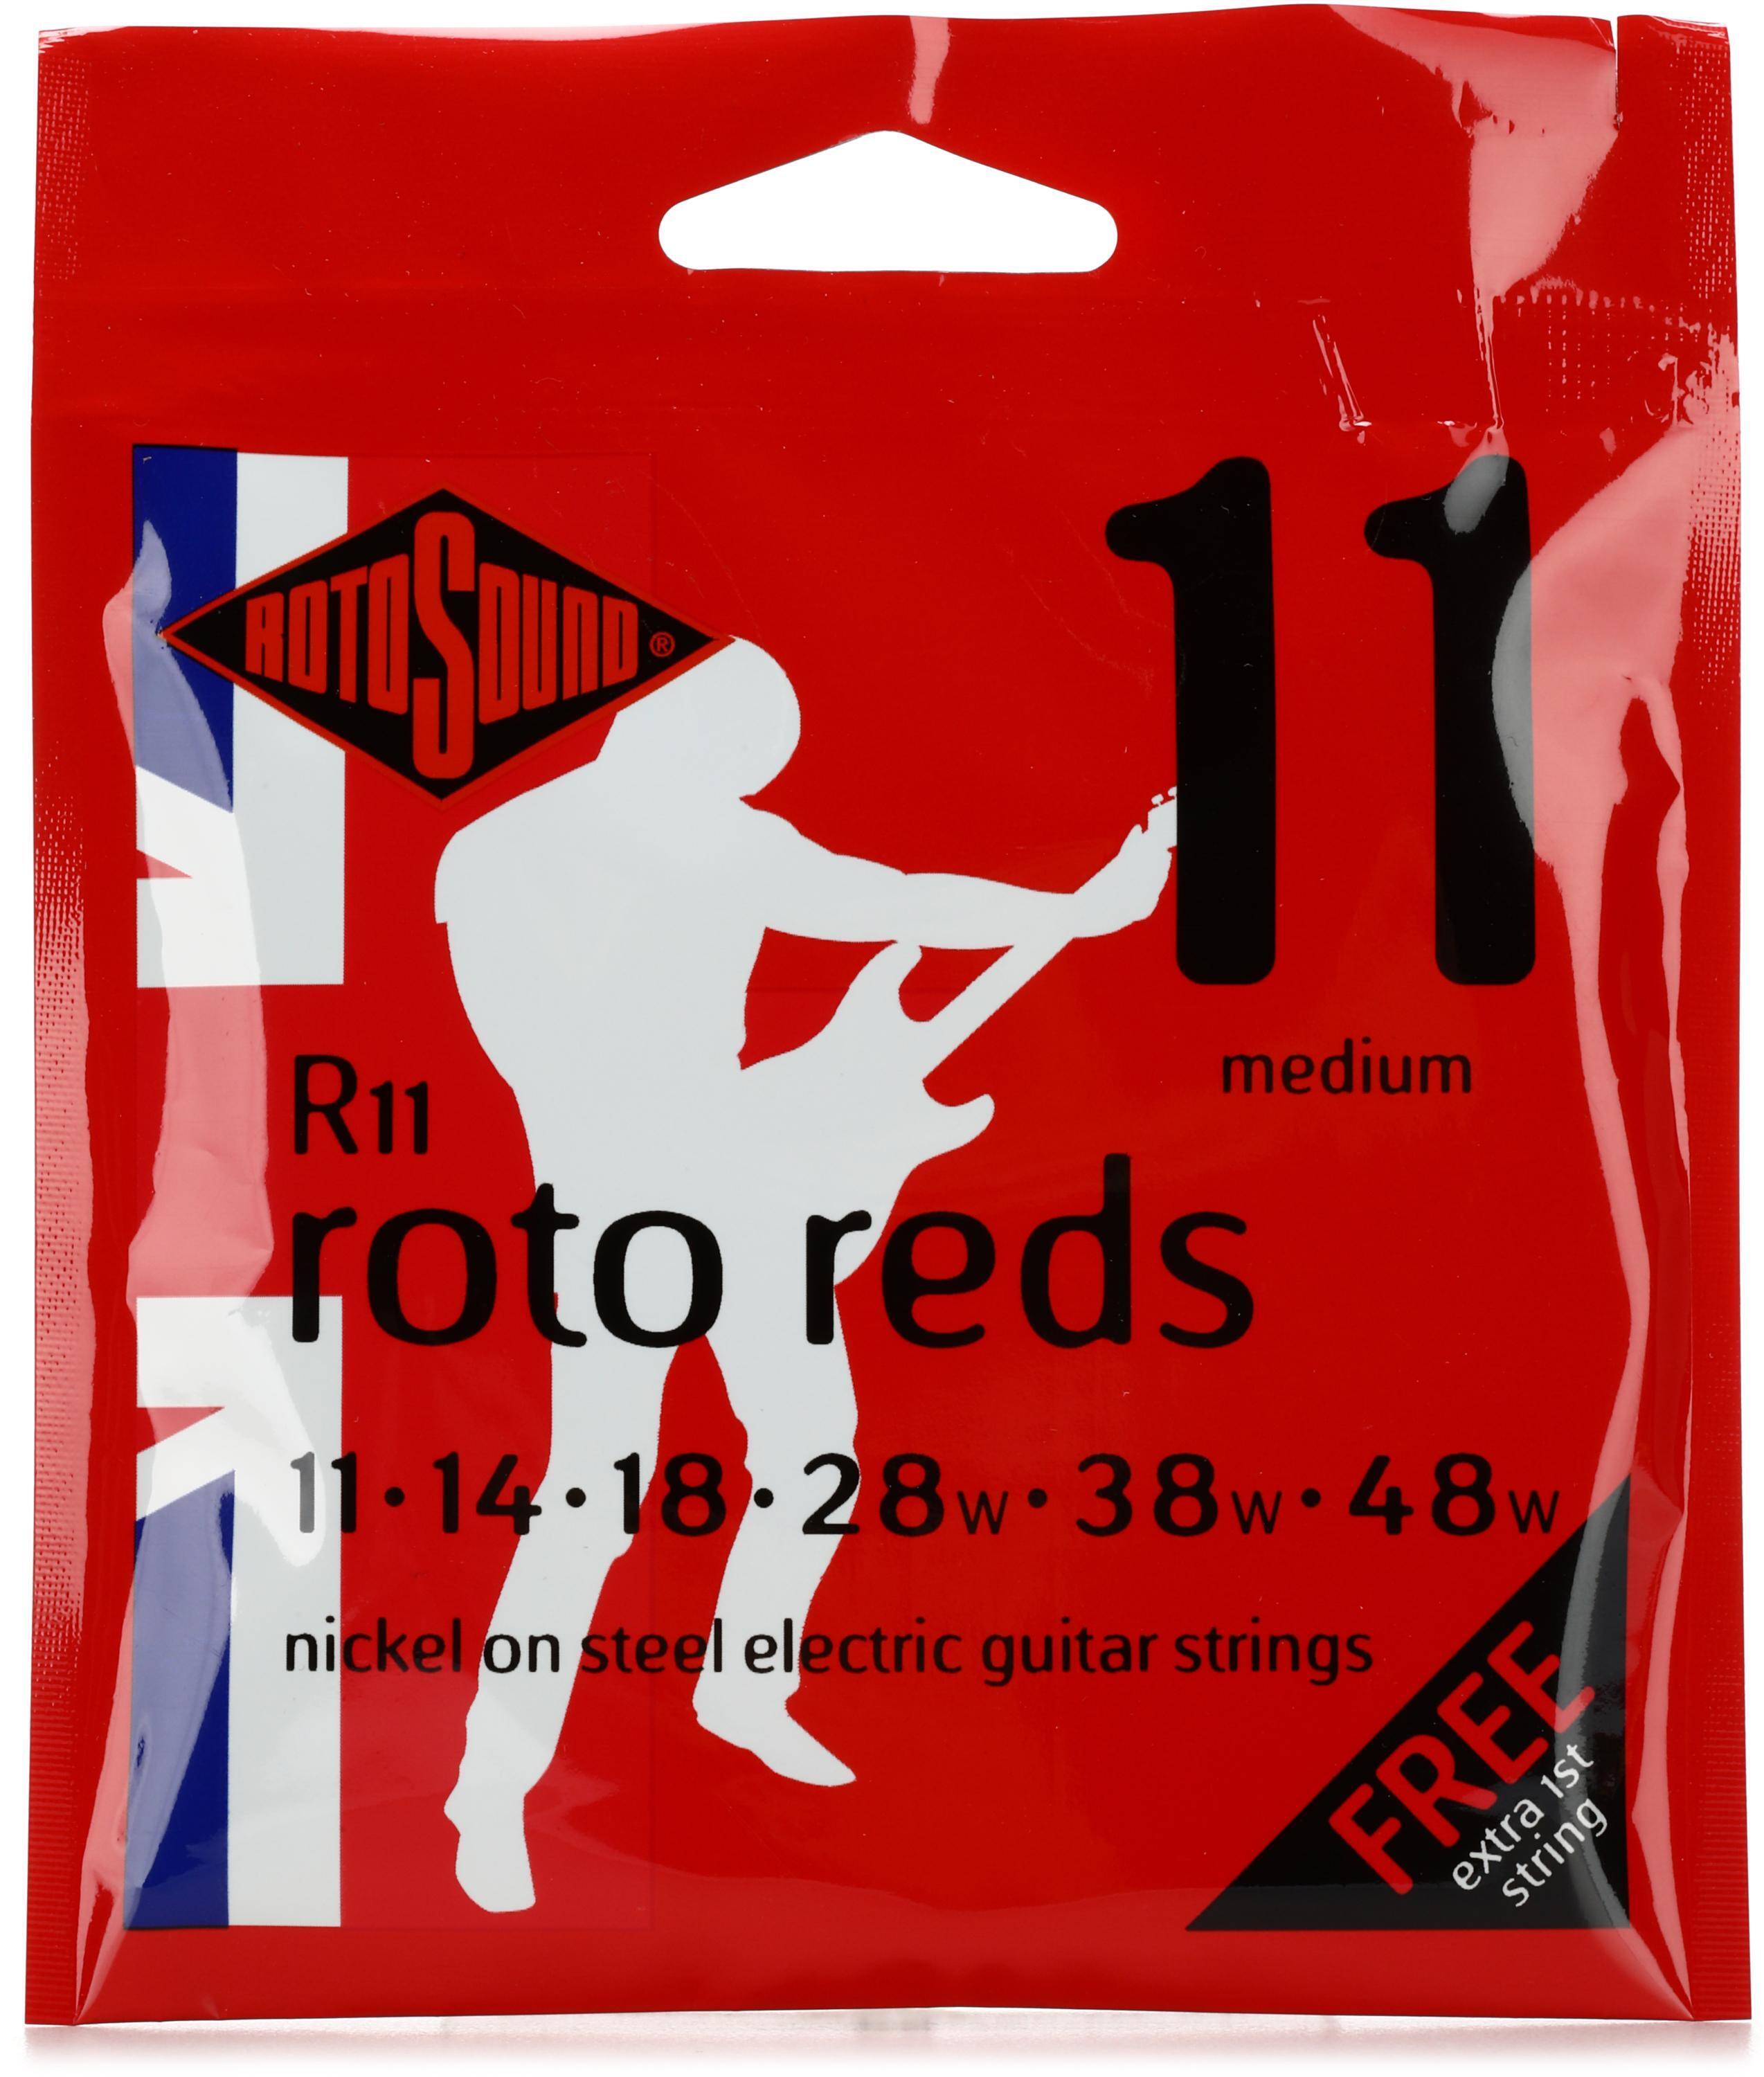 Rotosound R11 Roto Reds Nickel On Steel Electric Guitar Strings - .011-.048  Medium